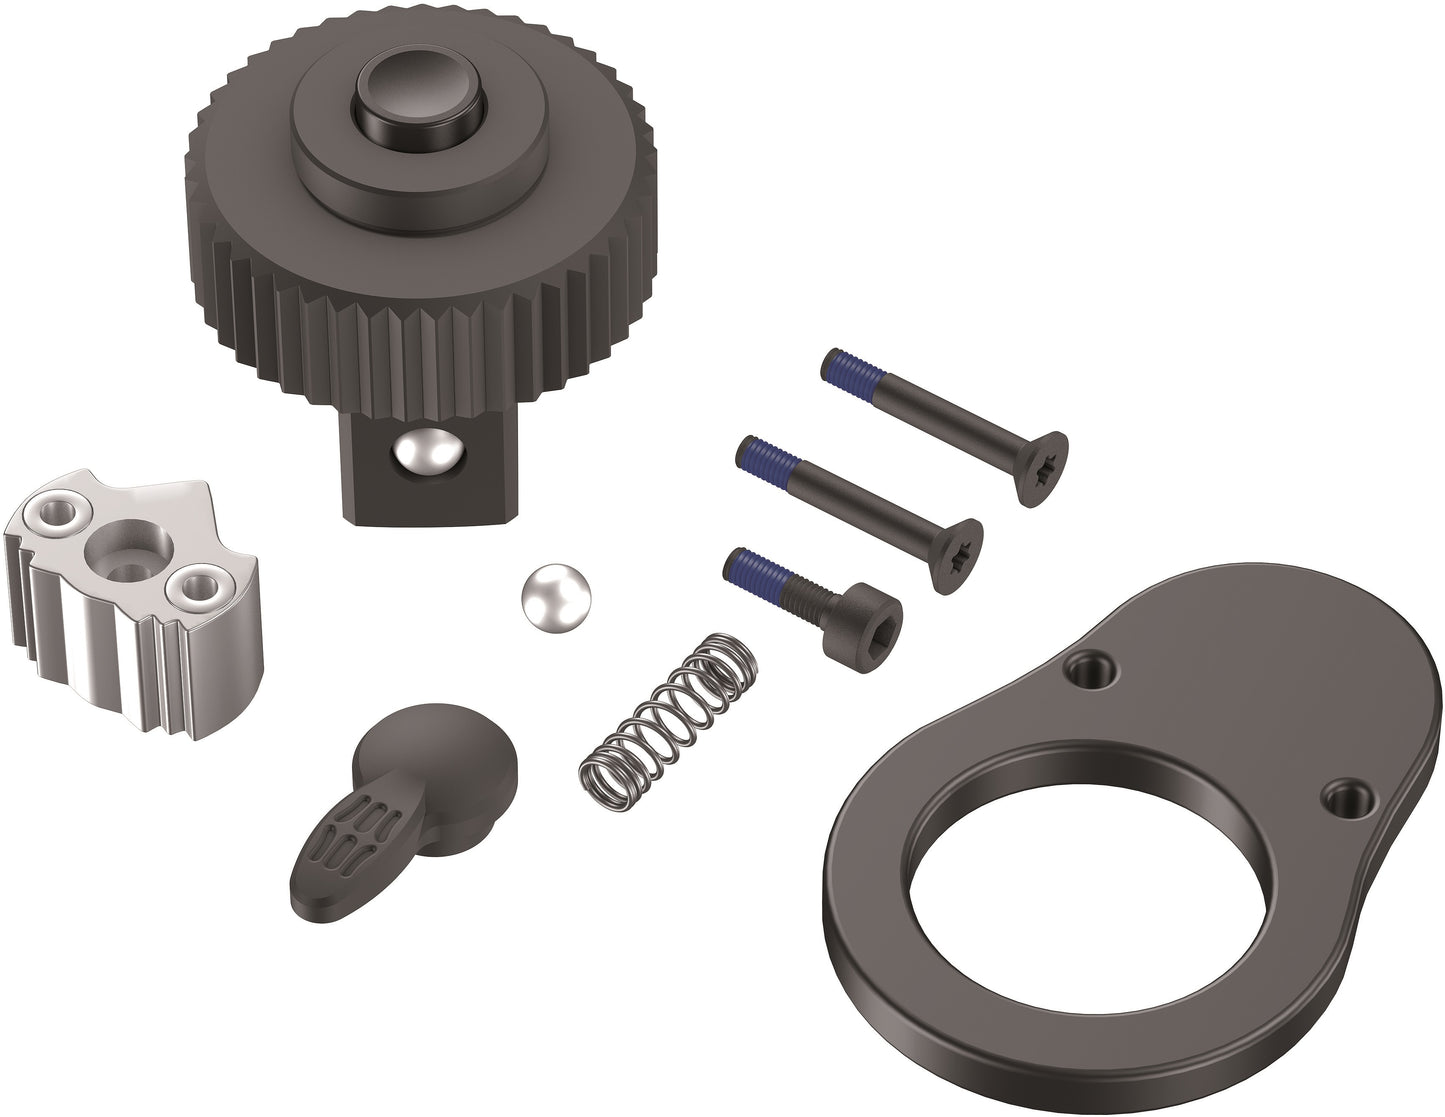 wera 9906 c 3 click torque ratchet wrench repair kit 1/2" 05547632001